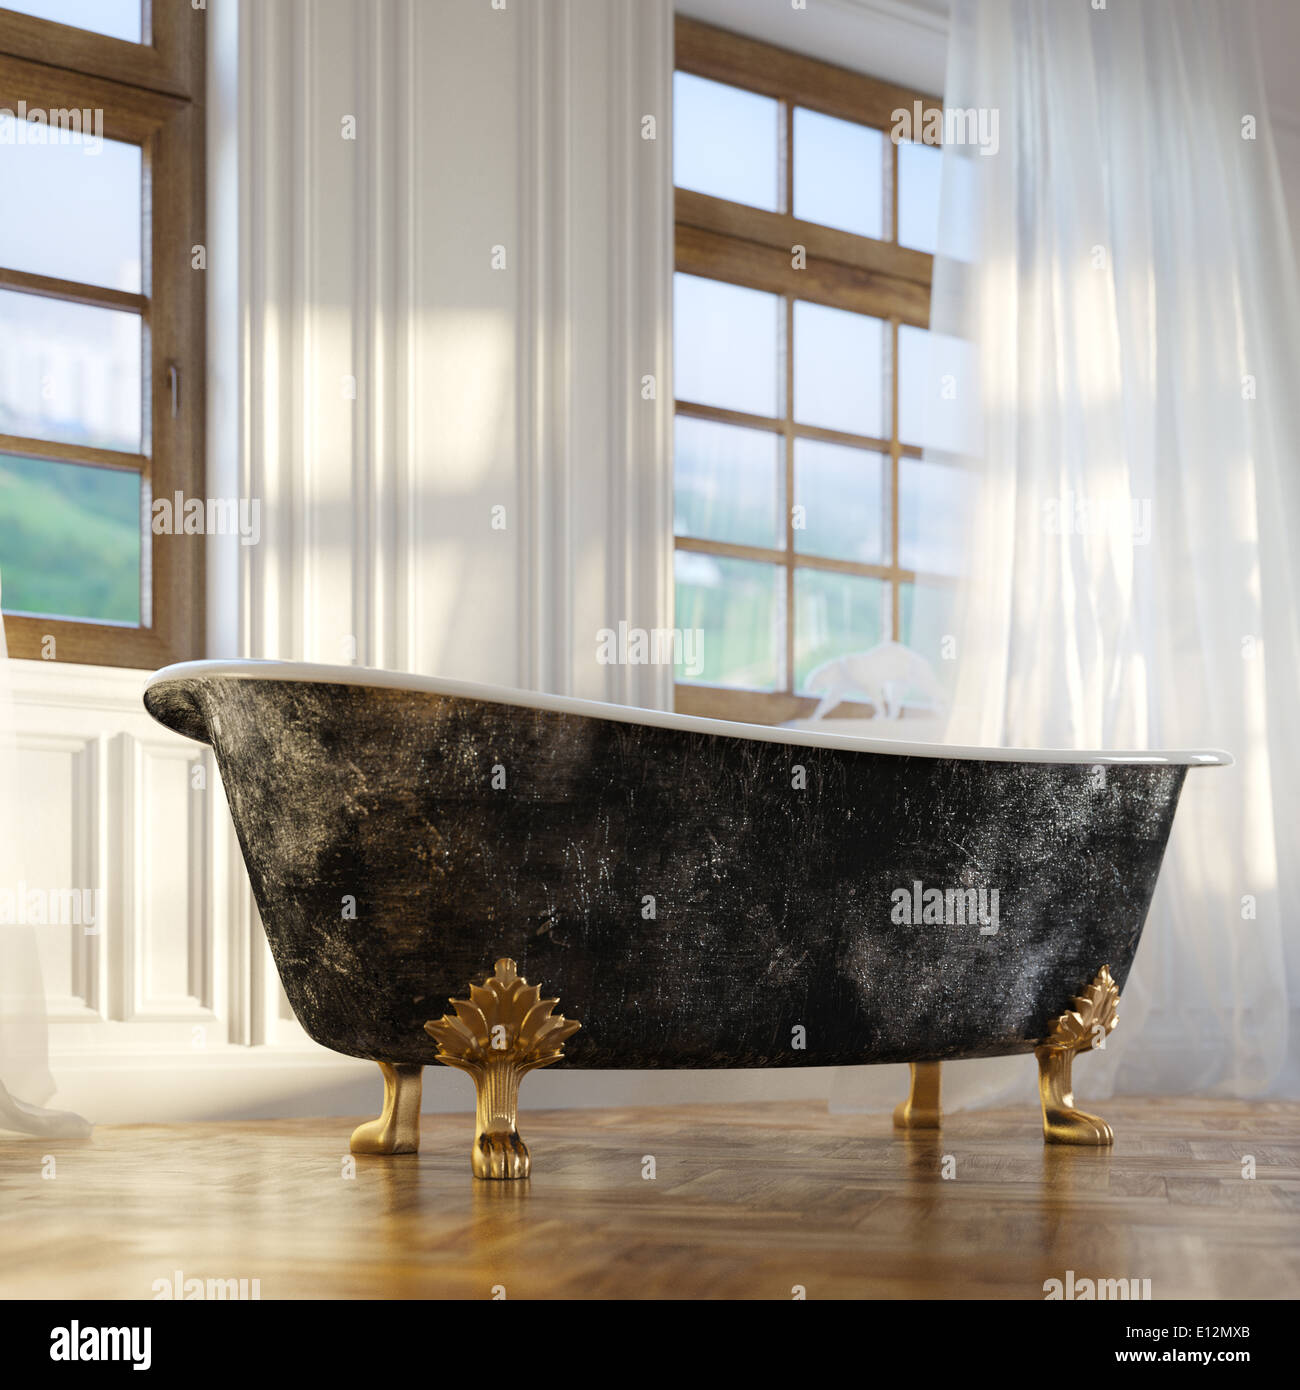 Luxury Retro Bathtub In Modern Room Interior Stock Photo - Alamy